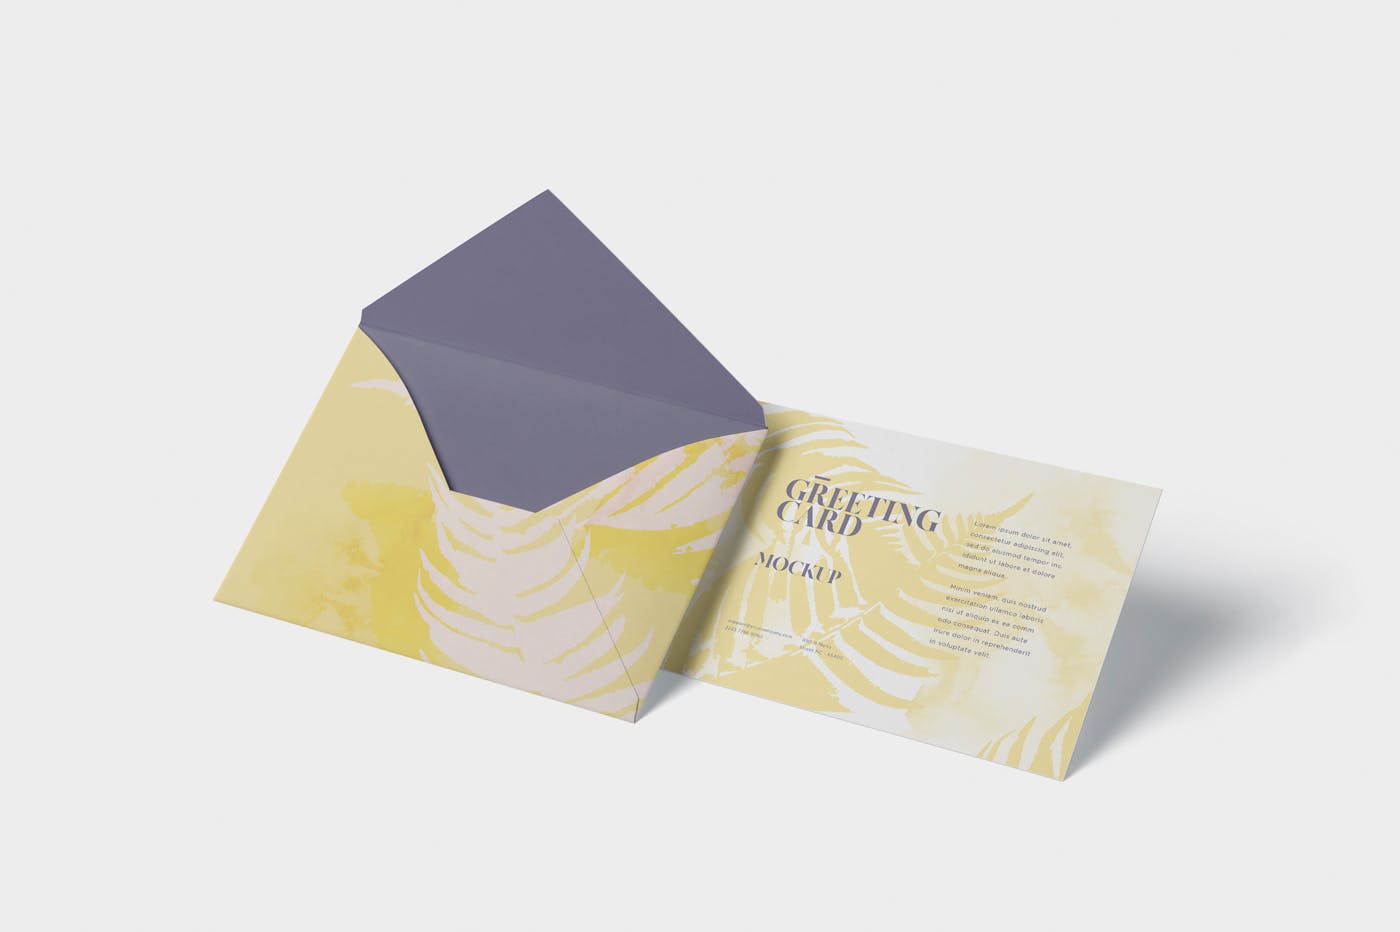 高端企业信封&贺卡设计图素材中国精选 Greeting Card Mockup with Envelope – A6 Size插图(2)